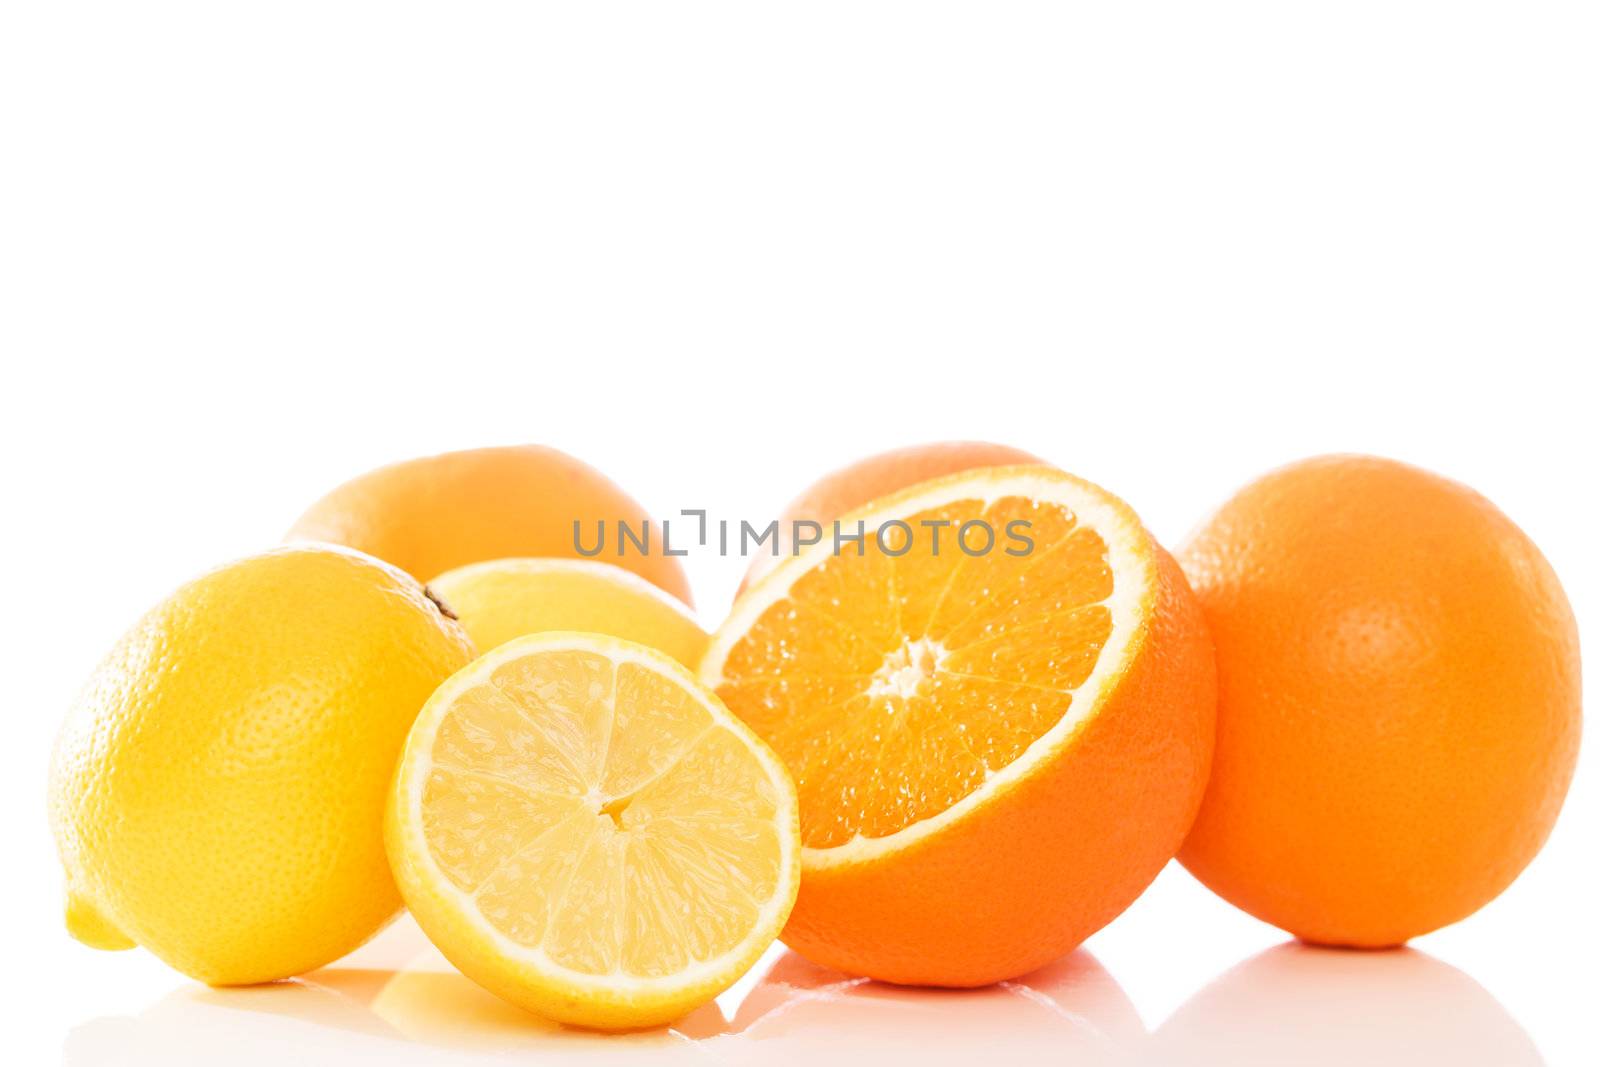 oranges and lemons by RobStark